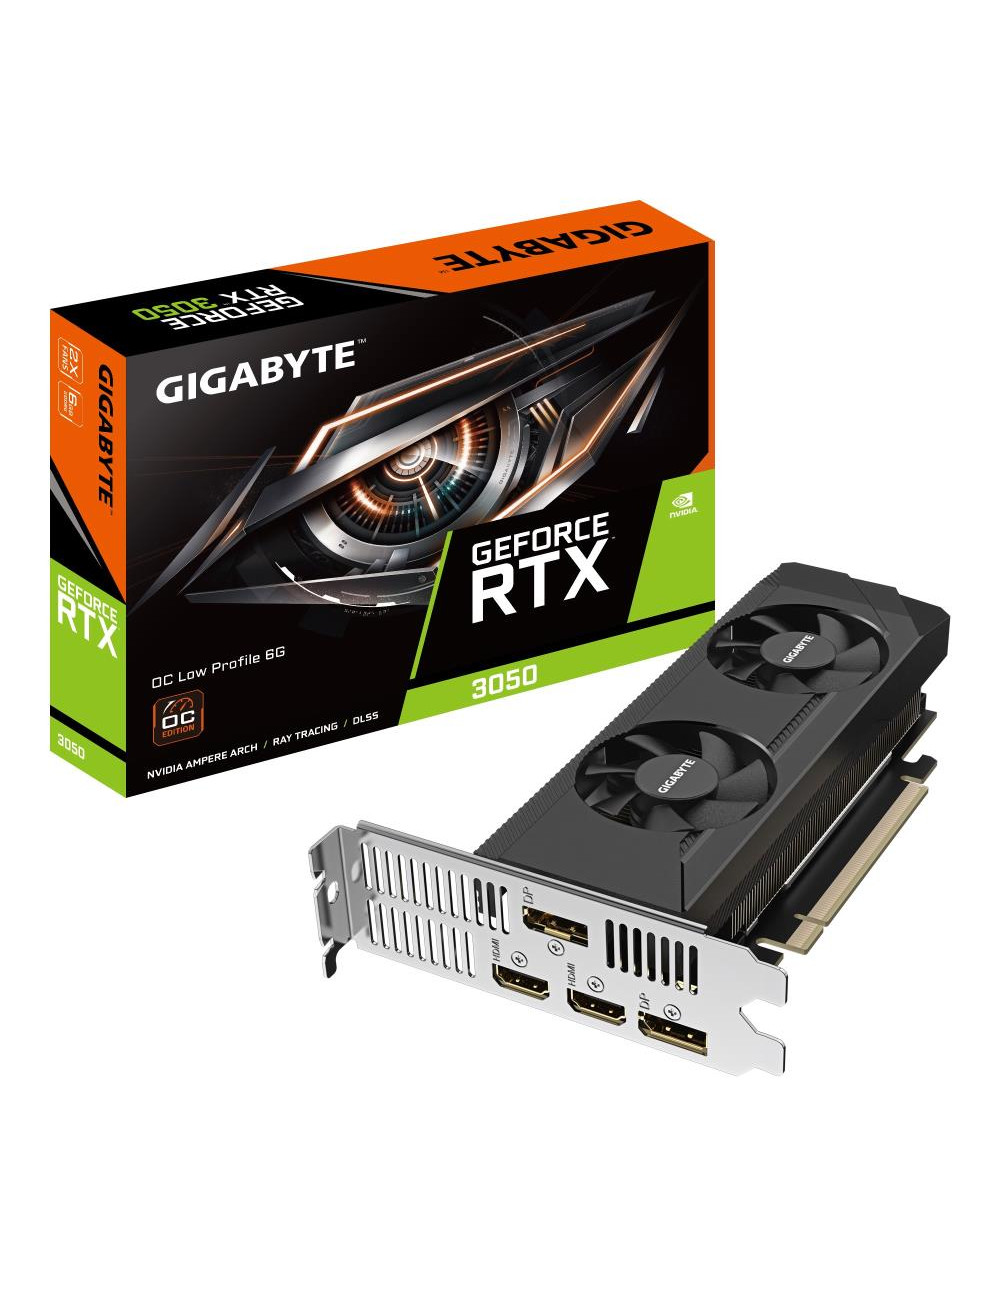 Graphics Card|GIGABYTE|NVIDIA GeForce RTX 3050|6 GB|GDDR6|96 bit|PCIE 4.0 16x|Memory 14000 MHz|GPU 1470 MHz|Dual Slot Fansink|2x